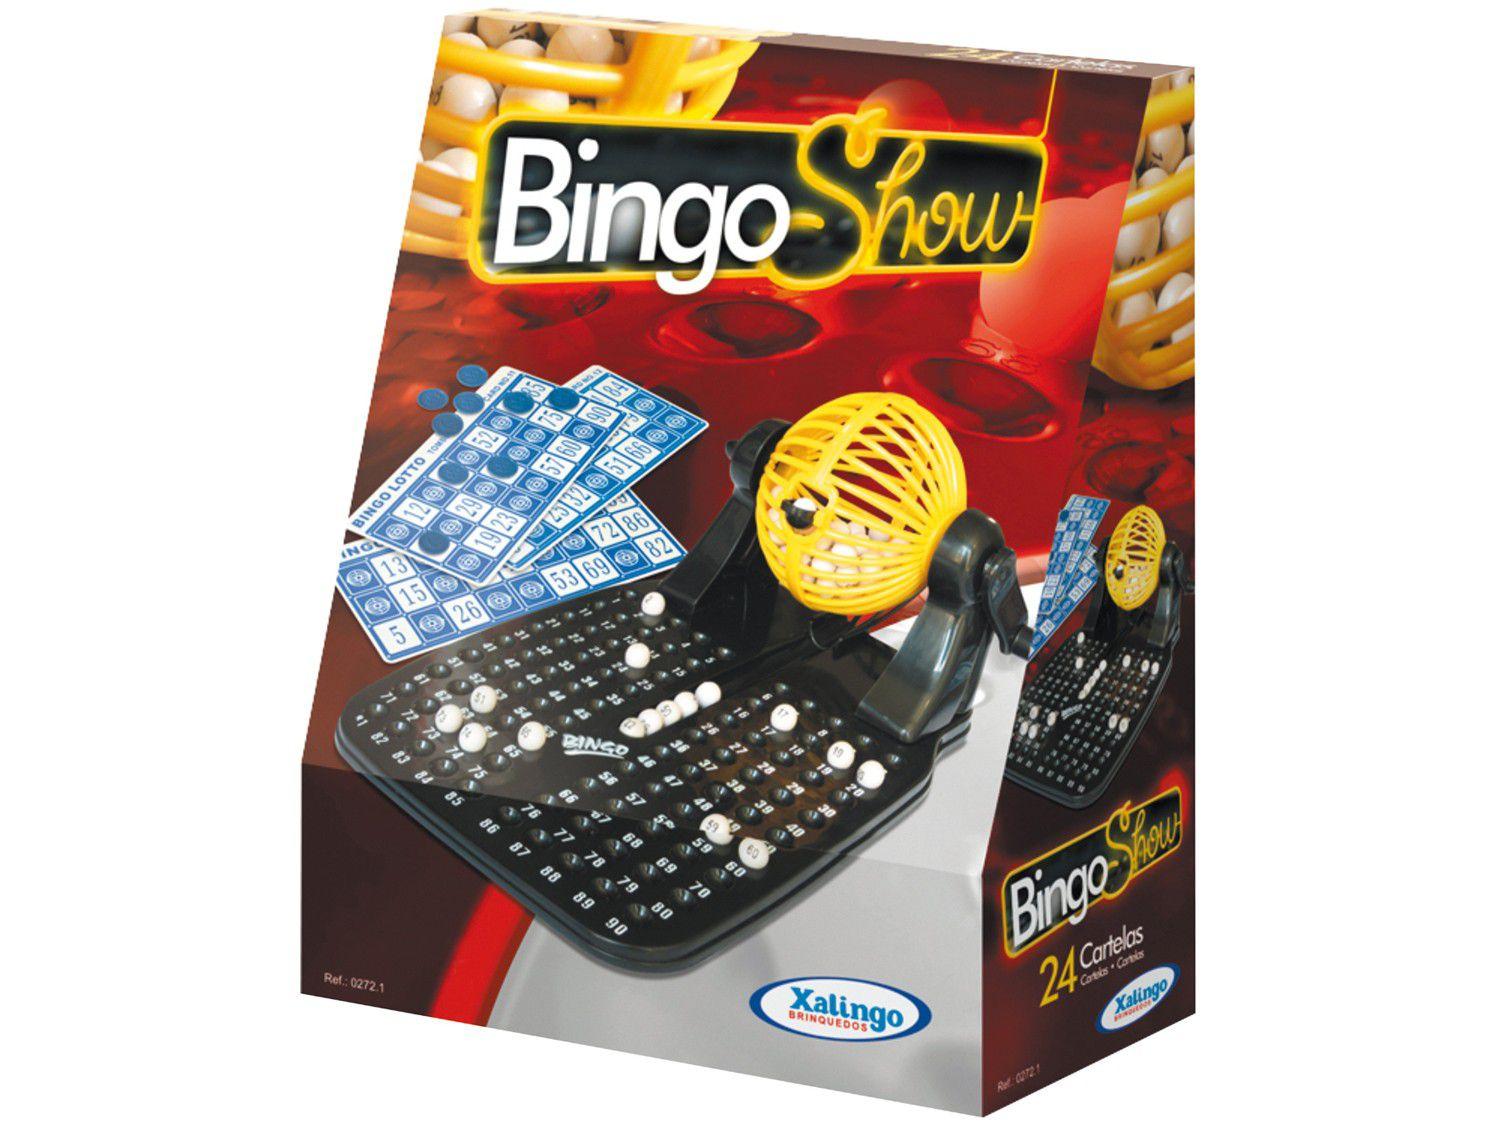 slot for bingo paga mesmo